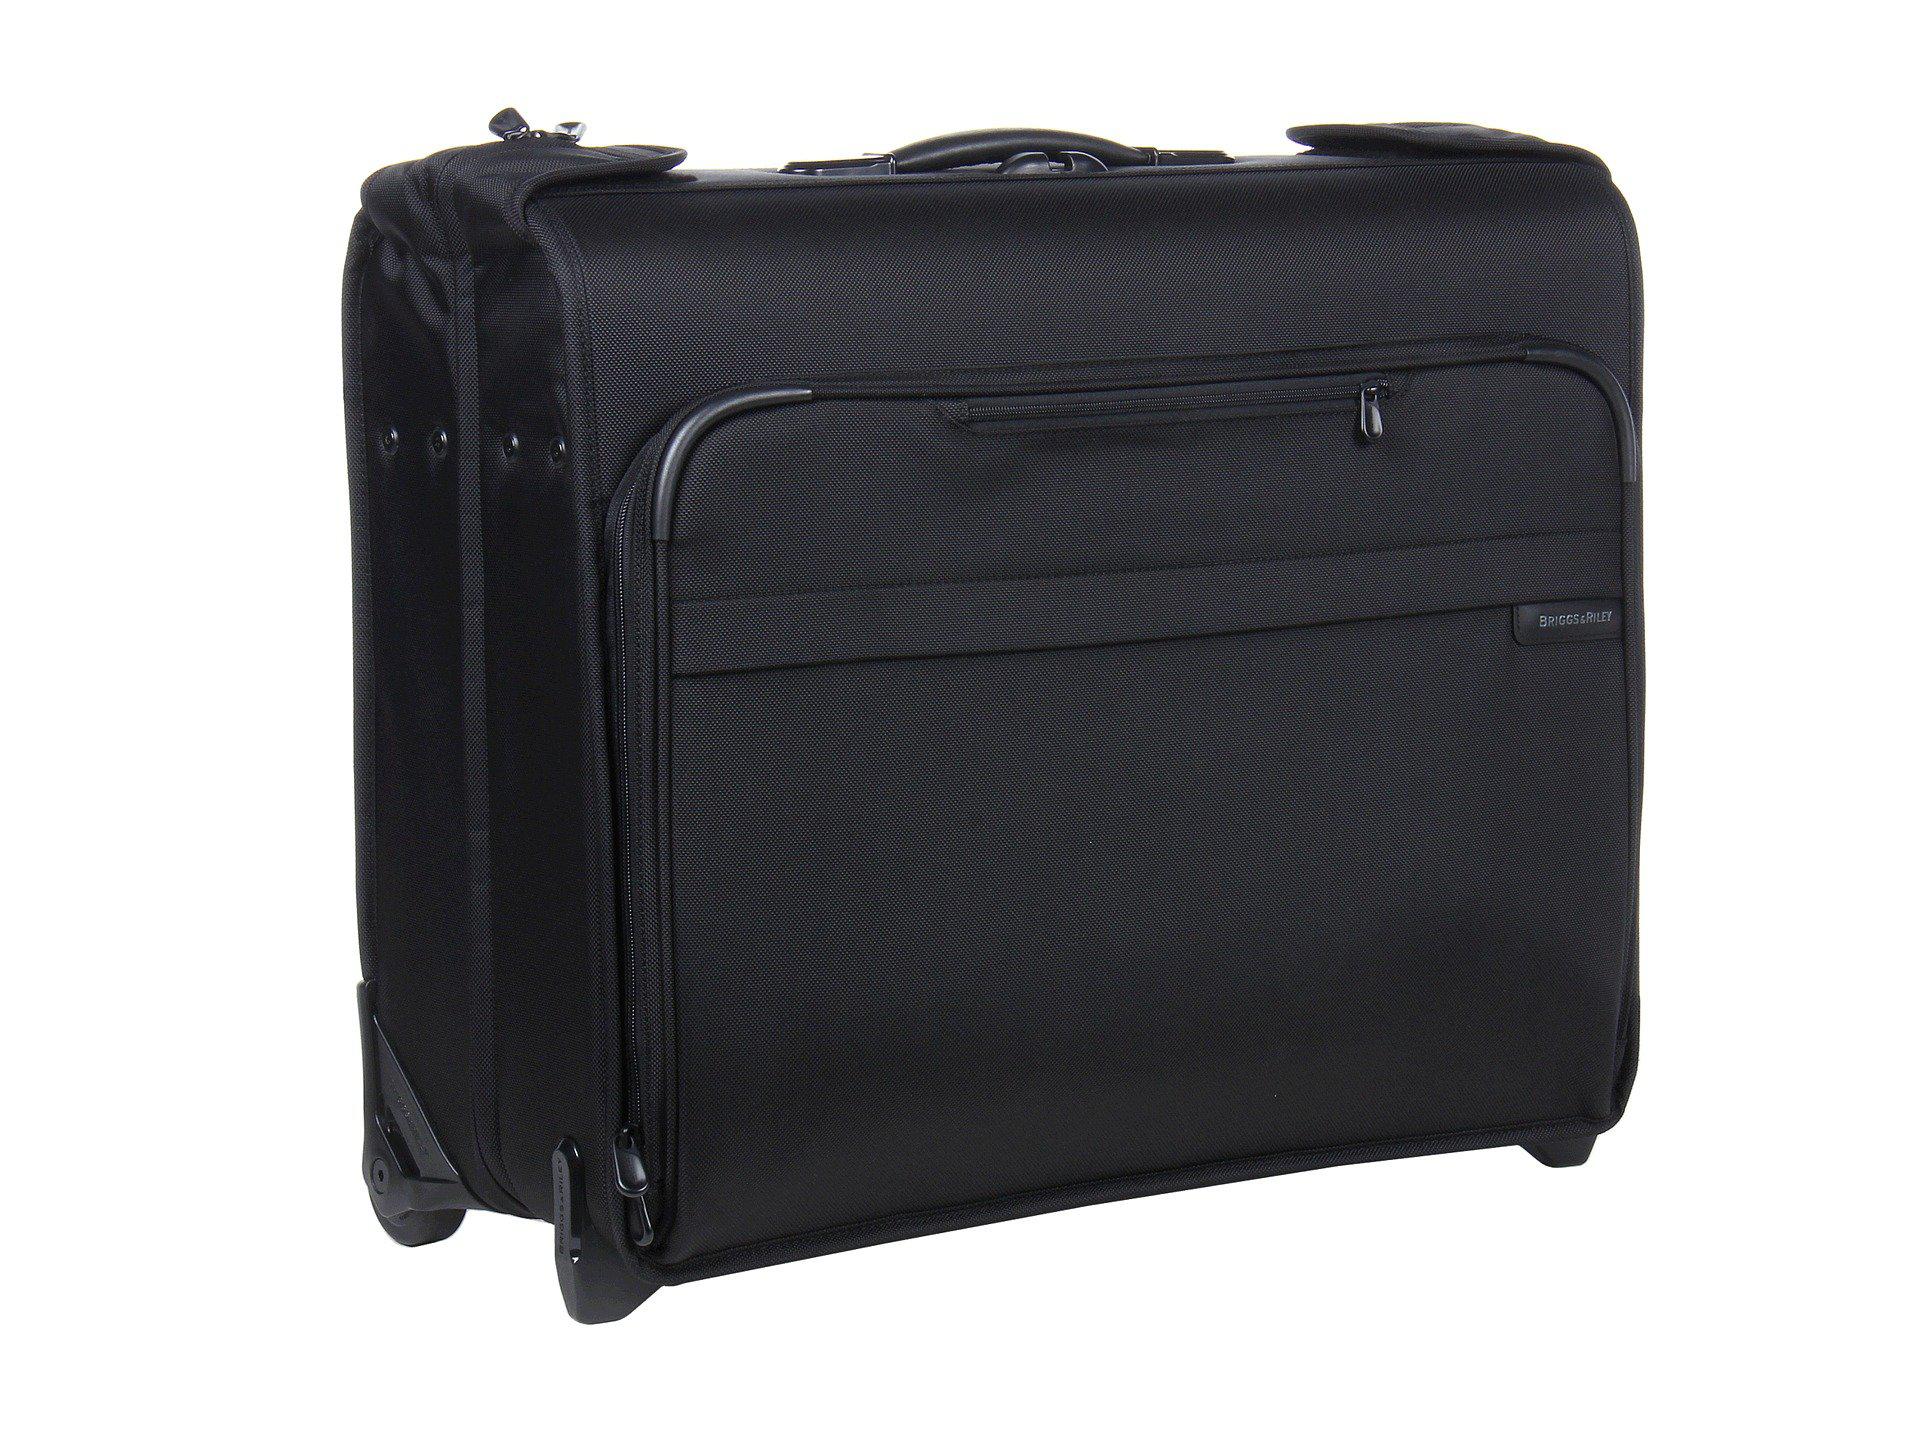 Lyst - Briggs & Riley Baseline Deluxe Wheeled Garment Bag (black) Luggage in Black